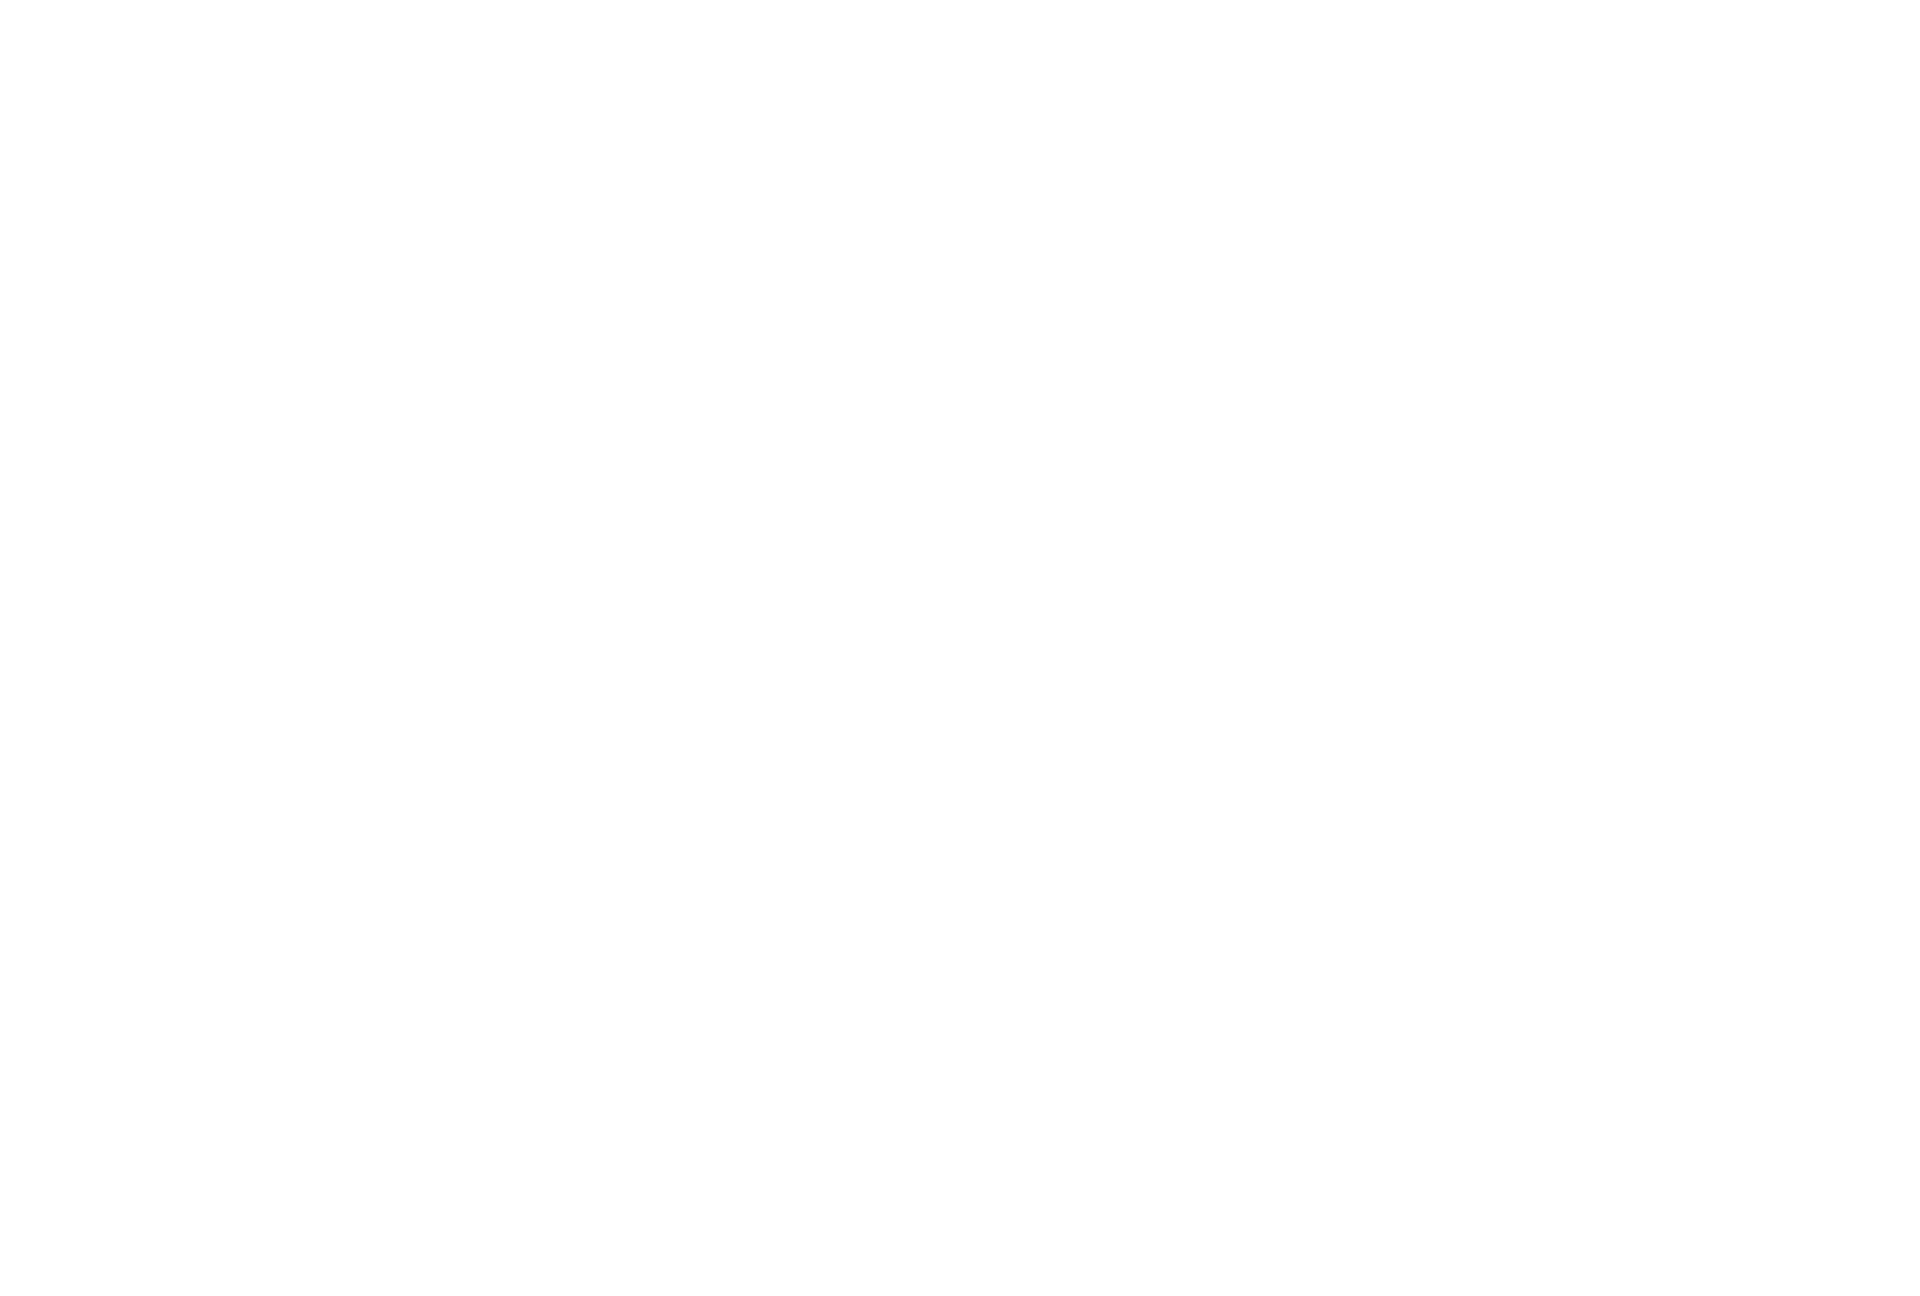 bakery logo